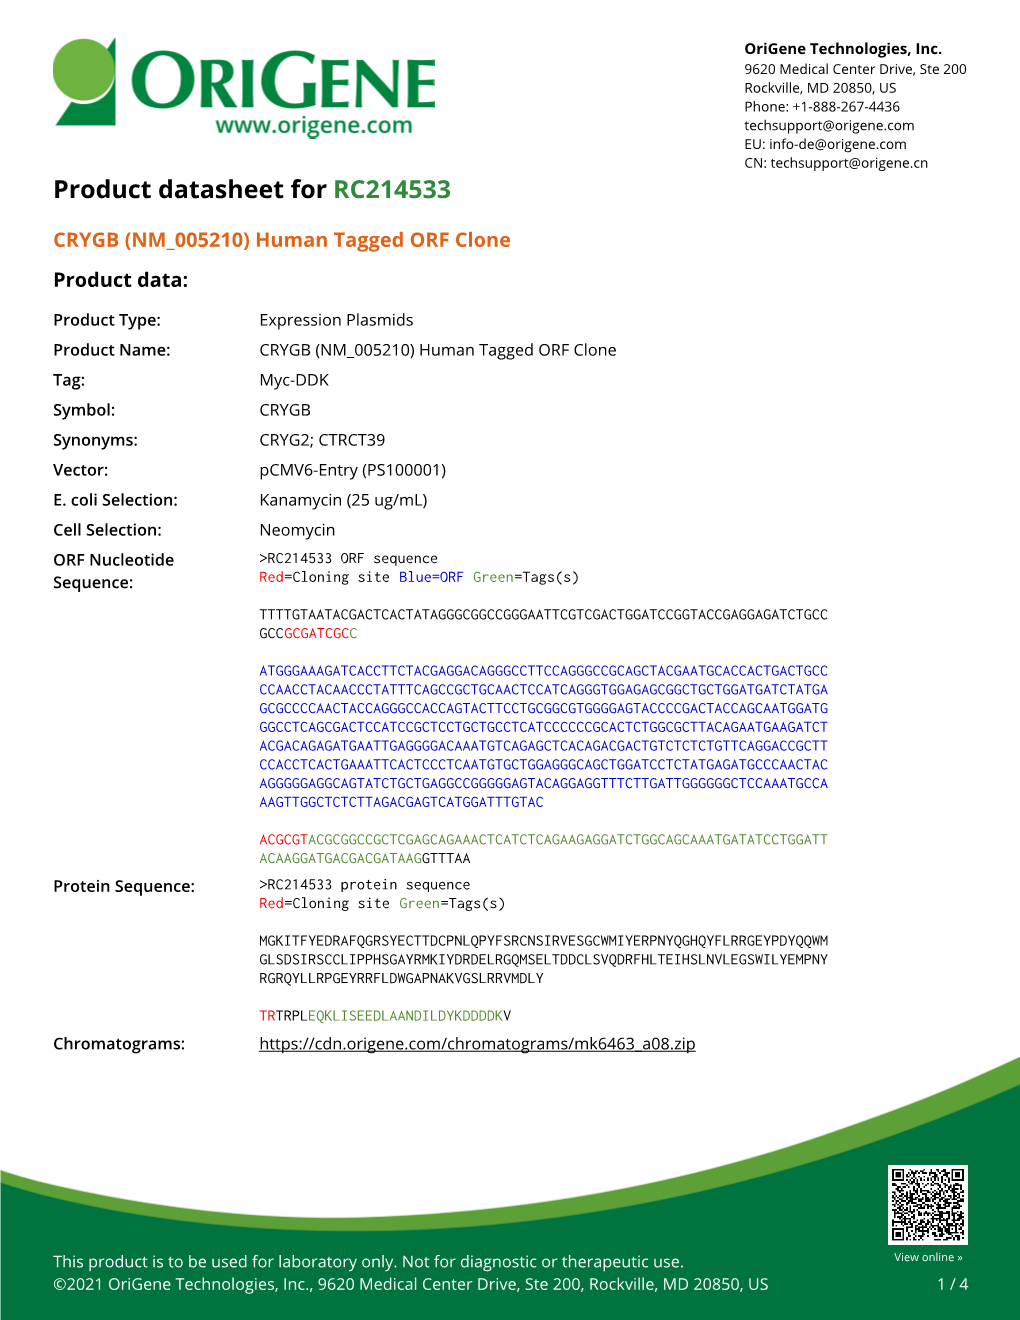 CRYGB (NM 005210) Human Tagged ORF Clone – RC214533